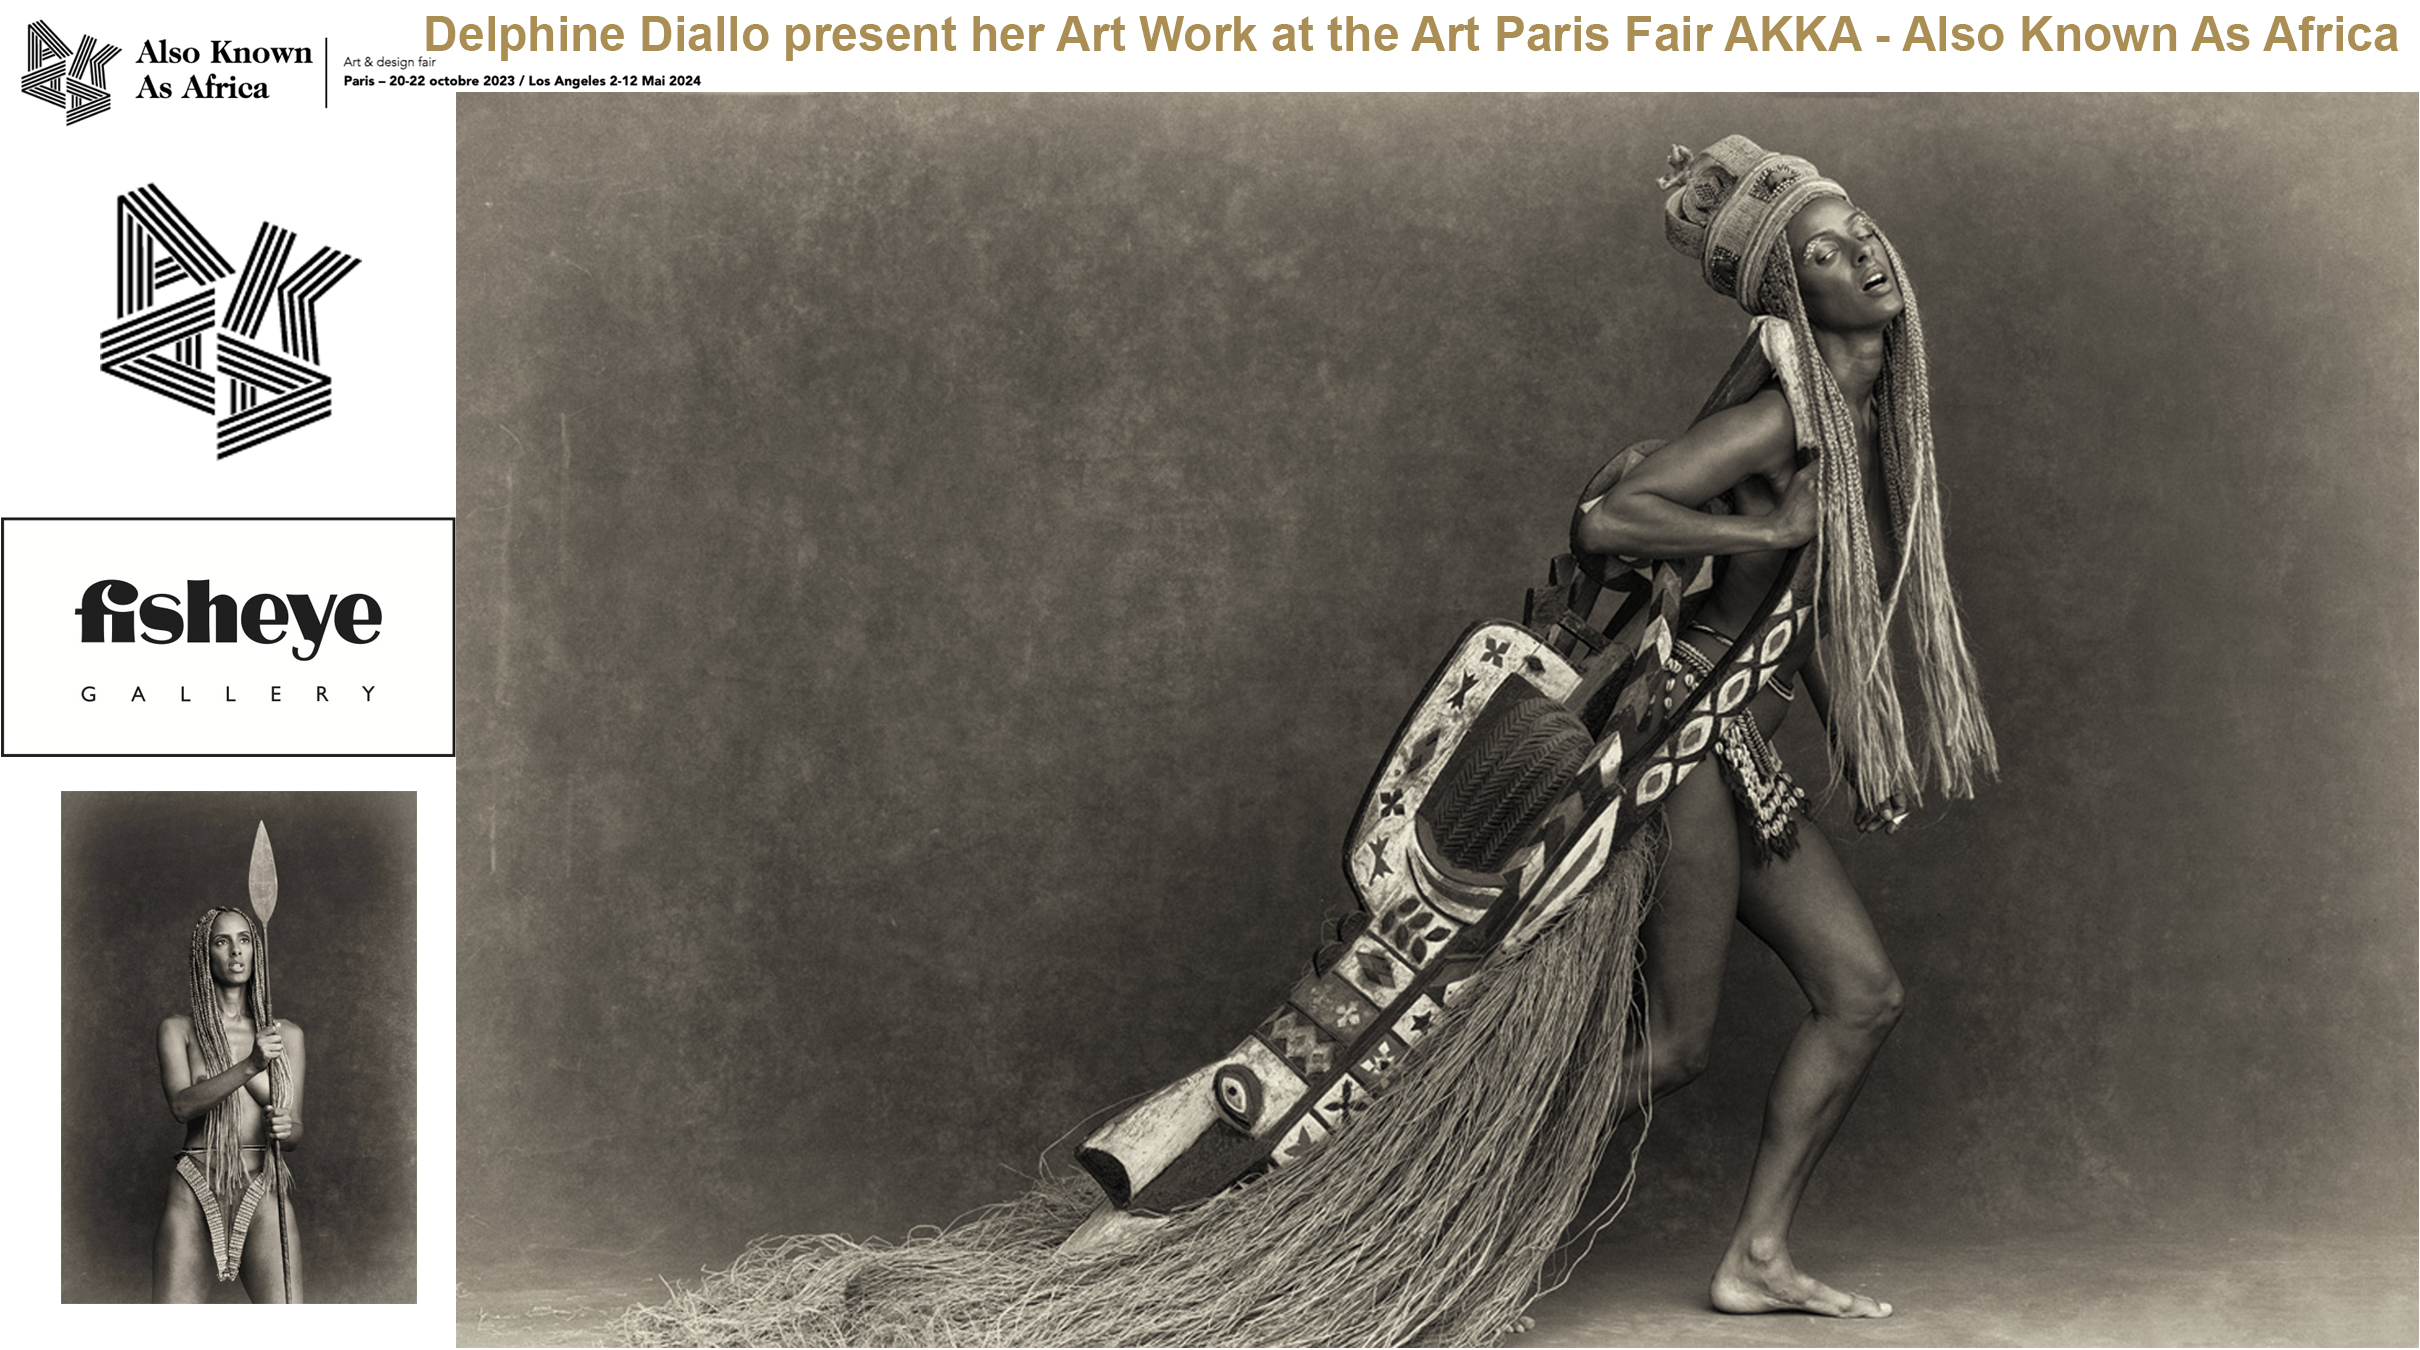 AFRICA-VOGUE-COVER-STUDIO-24-BENIN-Delphine-Diallo-present-her-Art-Work-at-the-Art-Paris-Fair-AKKA-Also-Known-As-Africa -DN-AFRICA-Media-Partner